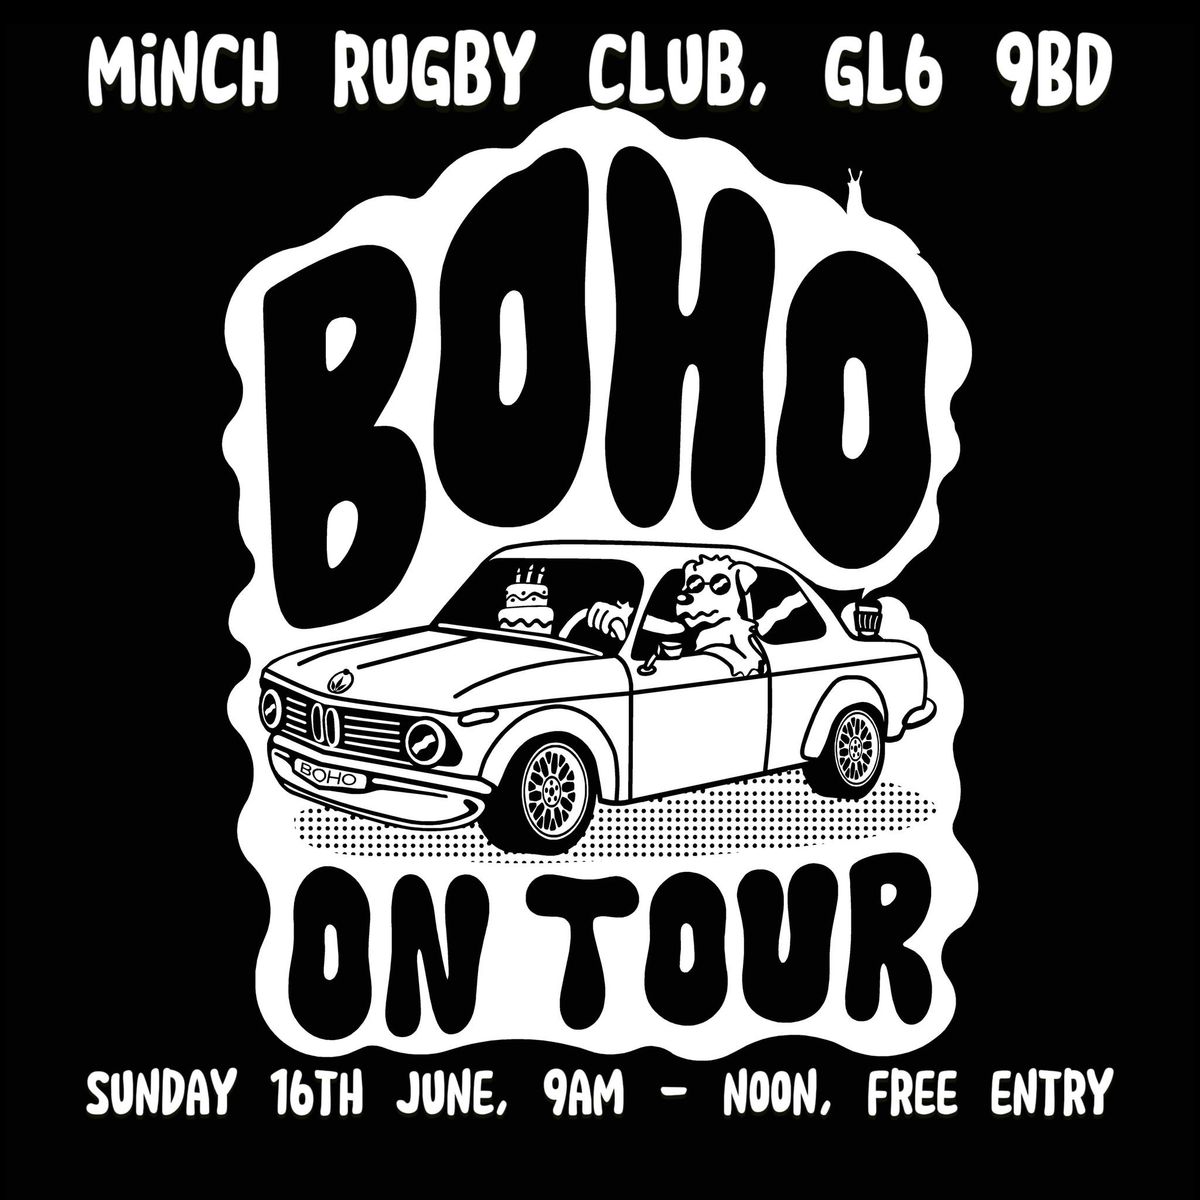 Monthly car meet at Minchinhampton Rugby Club